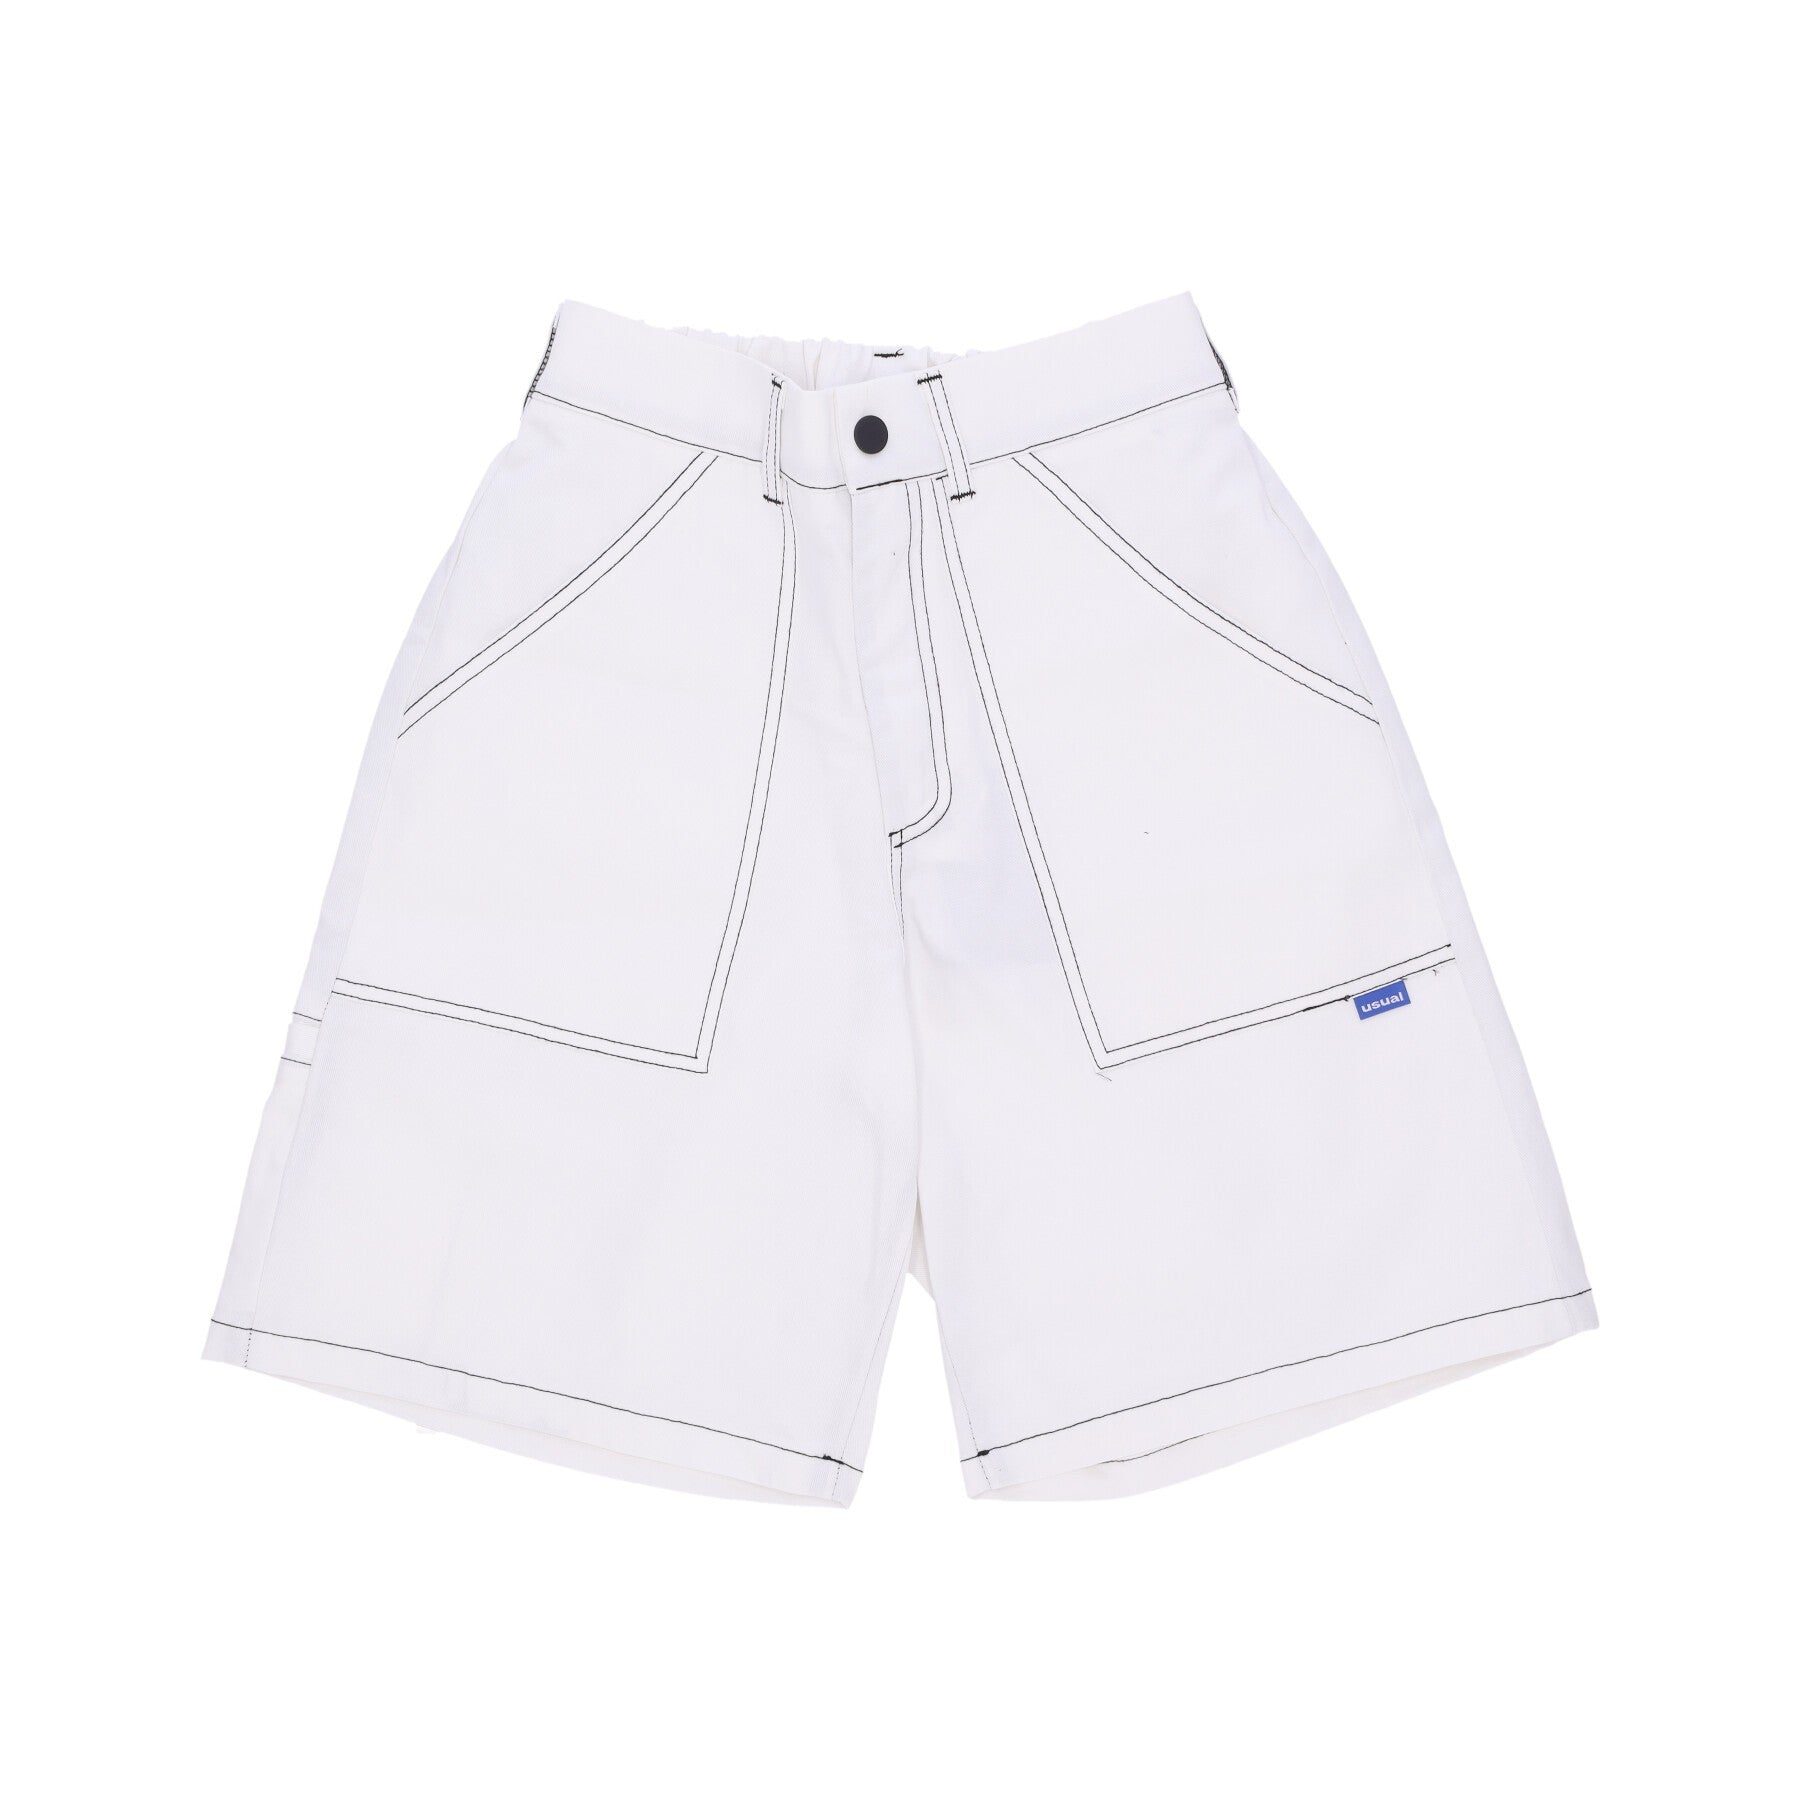 Usual, Pantalone Corto Uomo Buffer Shorts, White